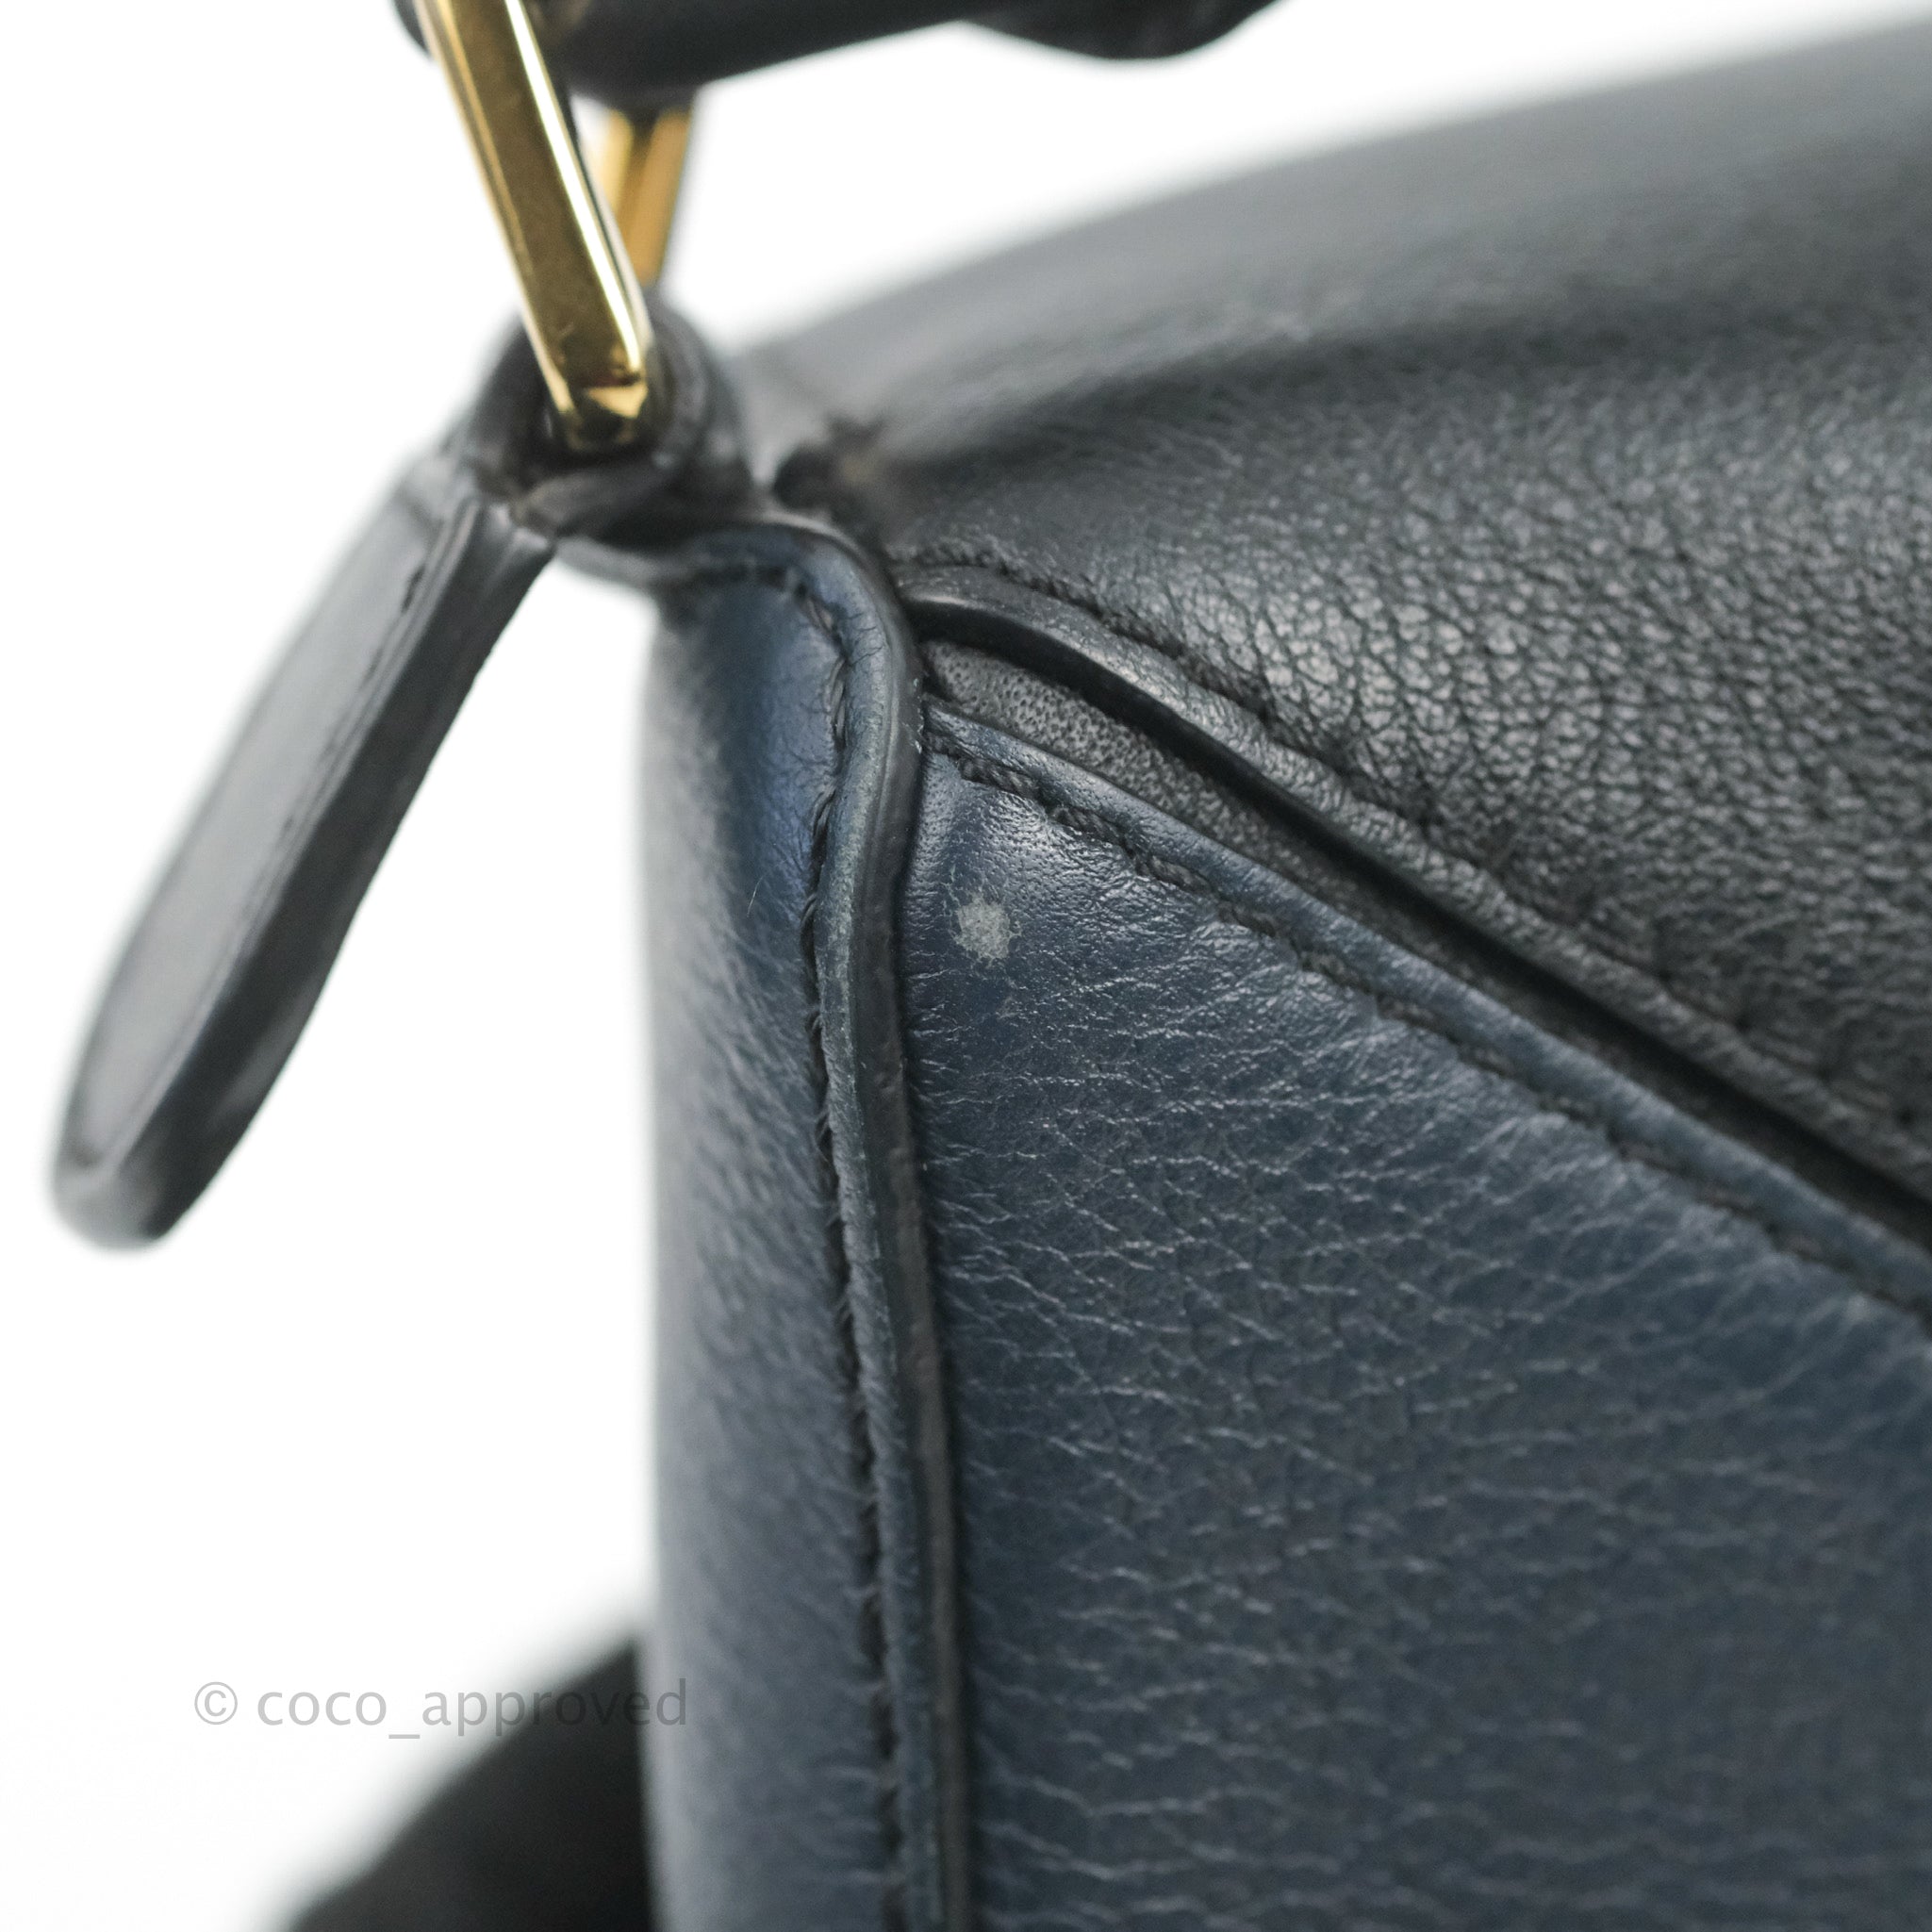 Loewe Blue Nano Puzzle Bag – BlackSkinny